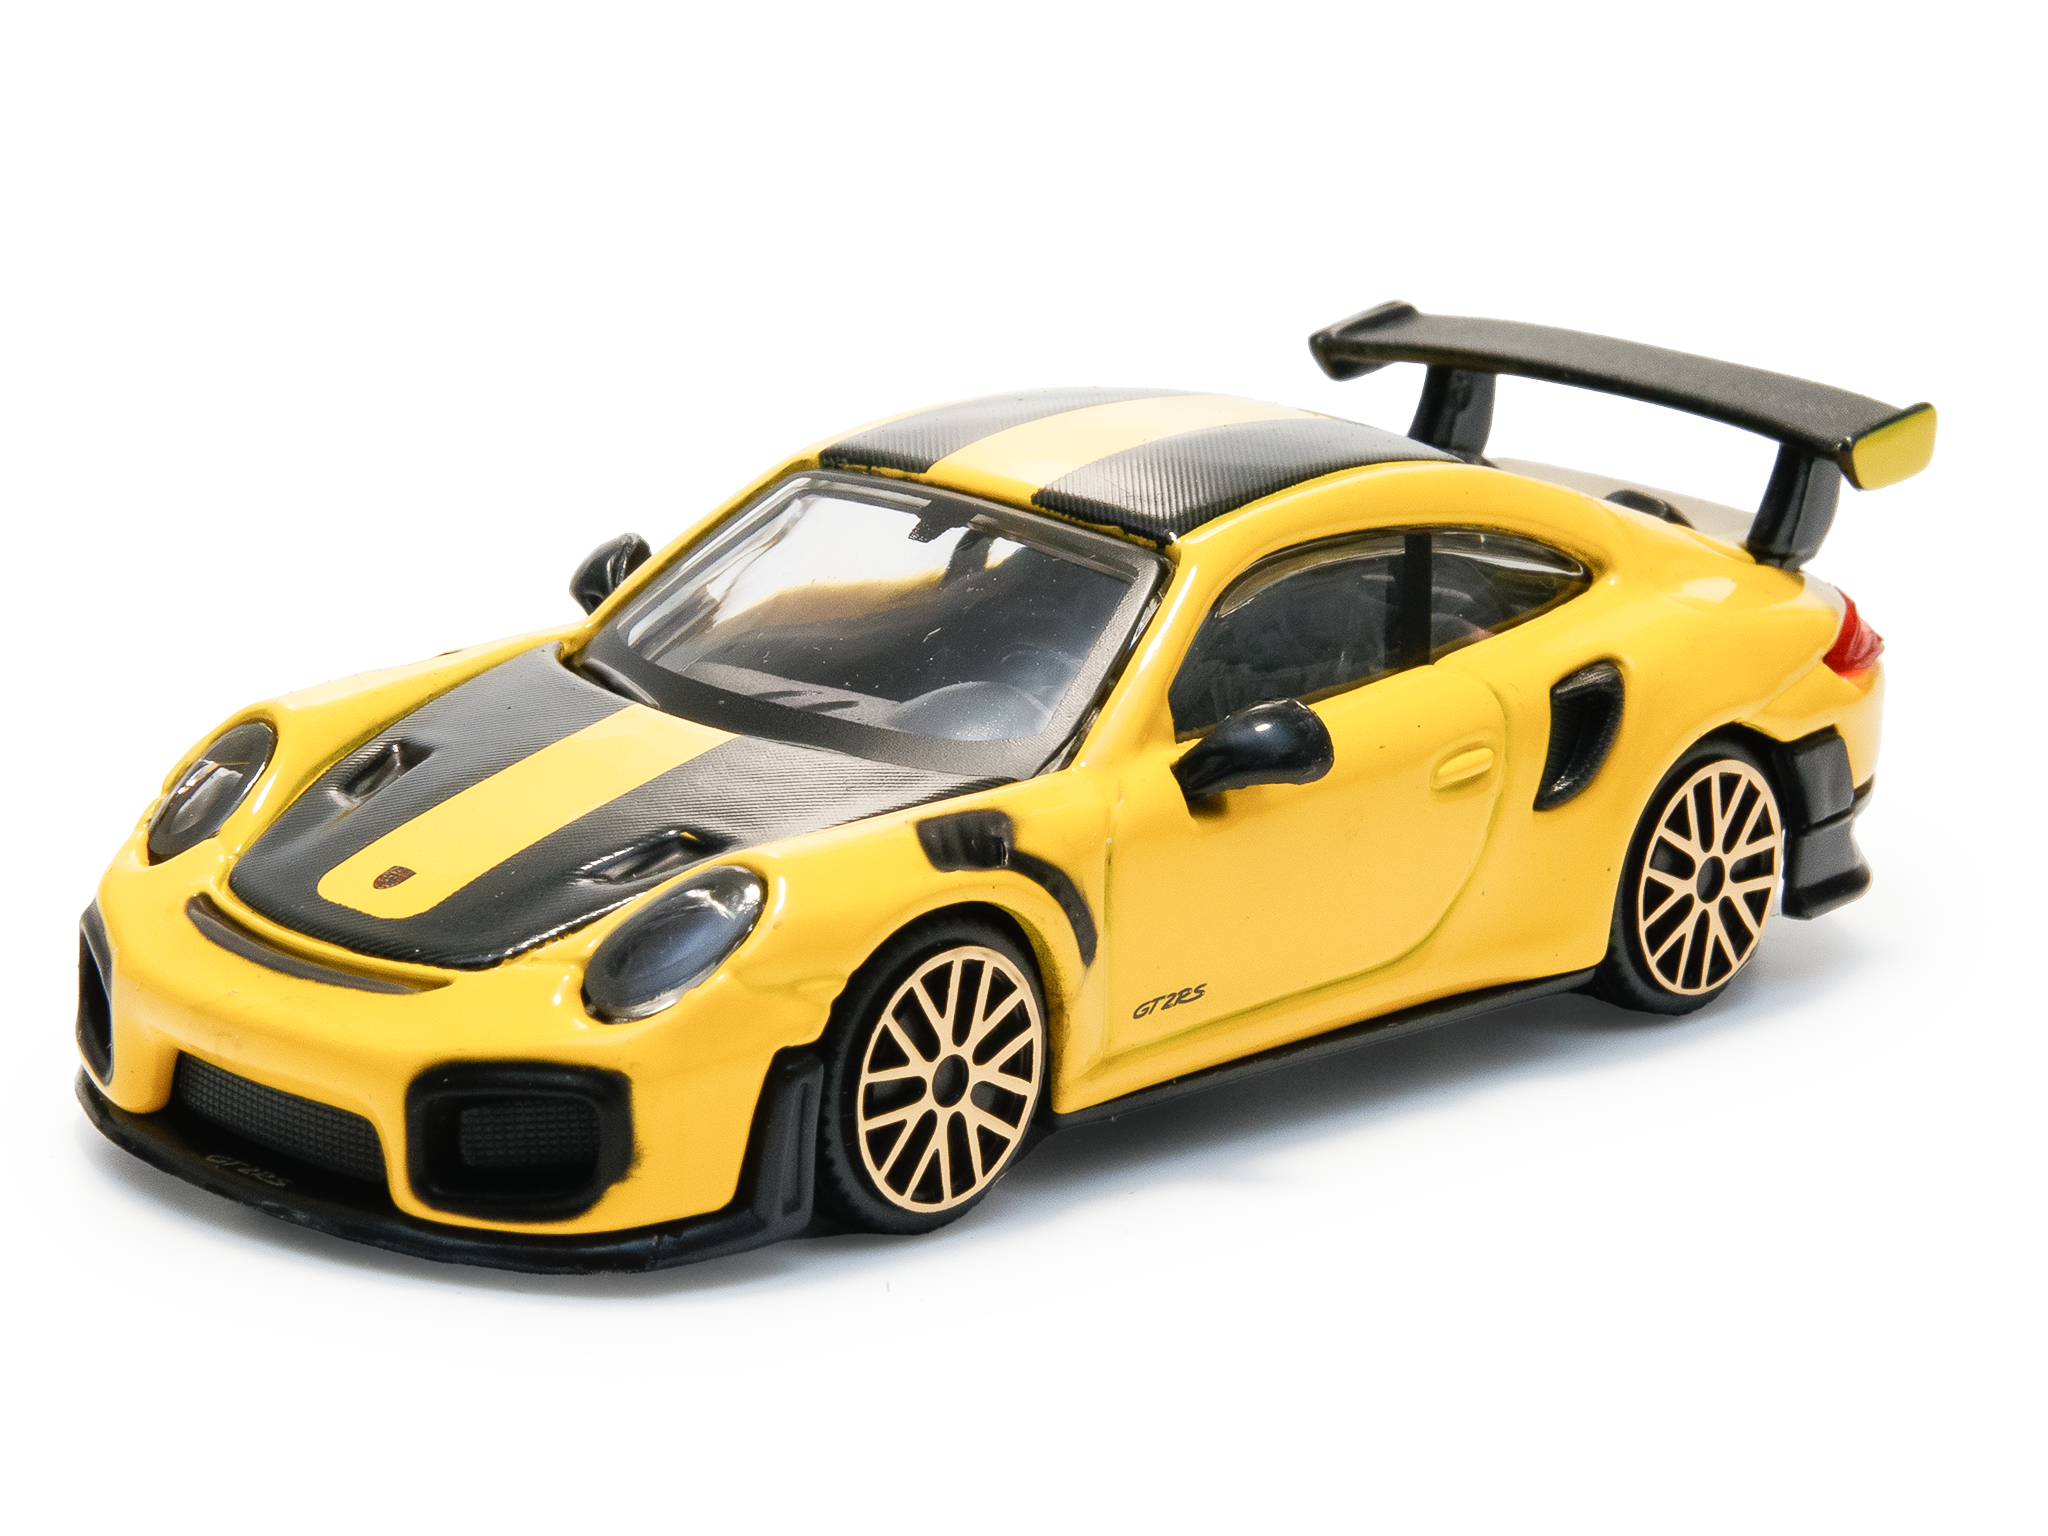 Porsche 911 GT2 RS yellow - 1:43 Scale Diecast Toy Car